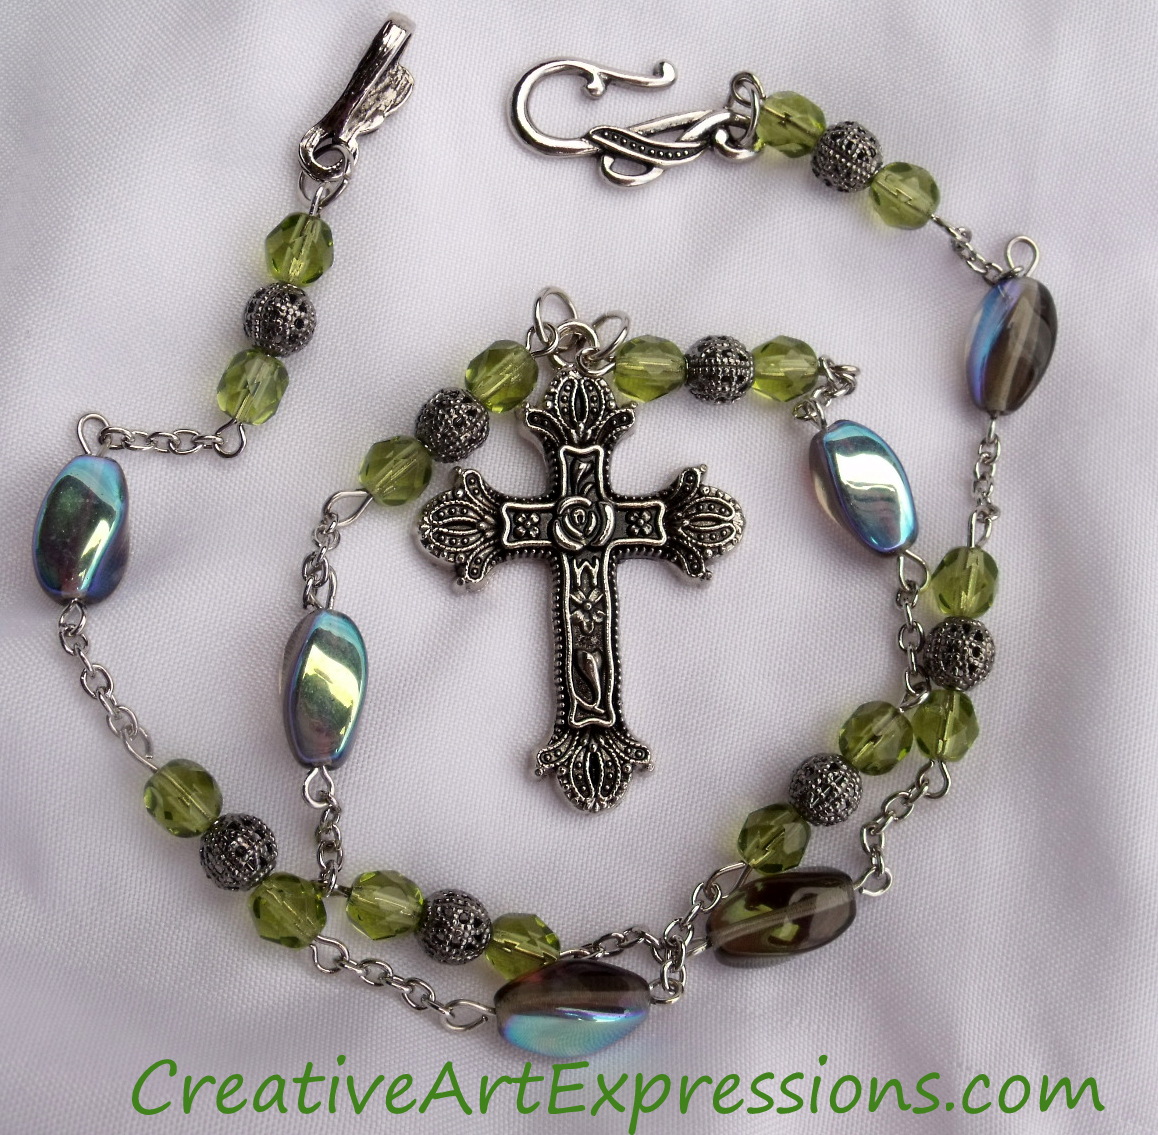 Creative Art Expressions Handmade Green & Silver Prayer Beads Necklace Jewelry Design